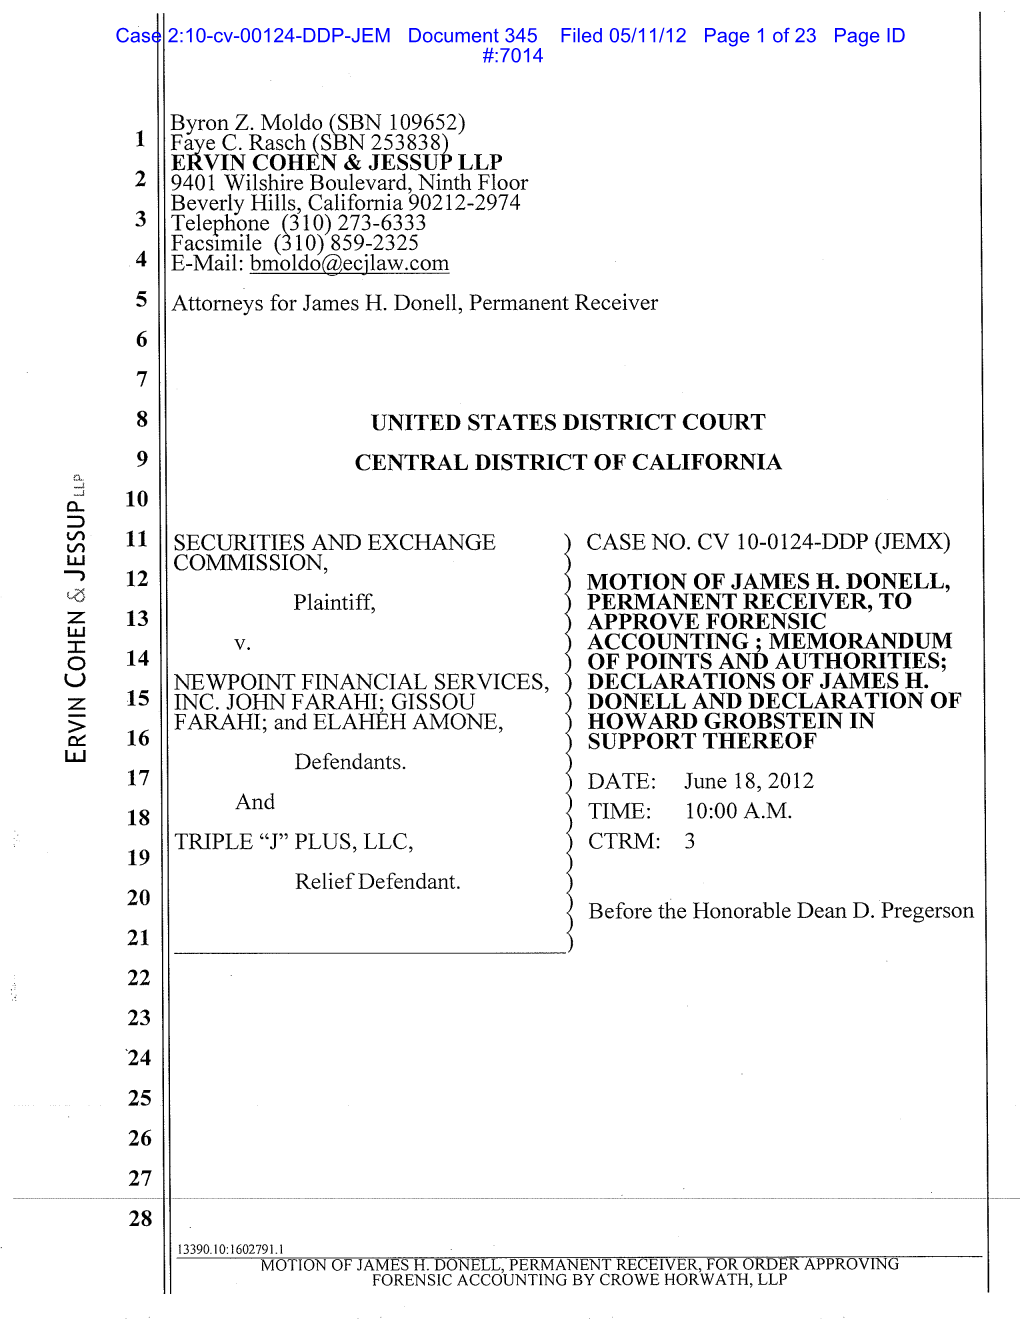 Case 2:10-Cv-00124-DDP-JEM Document 345 Filed